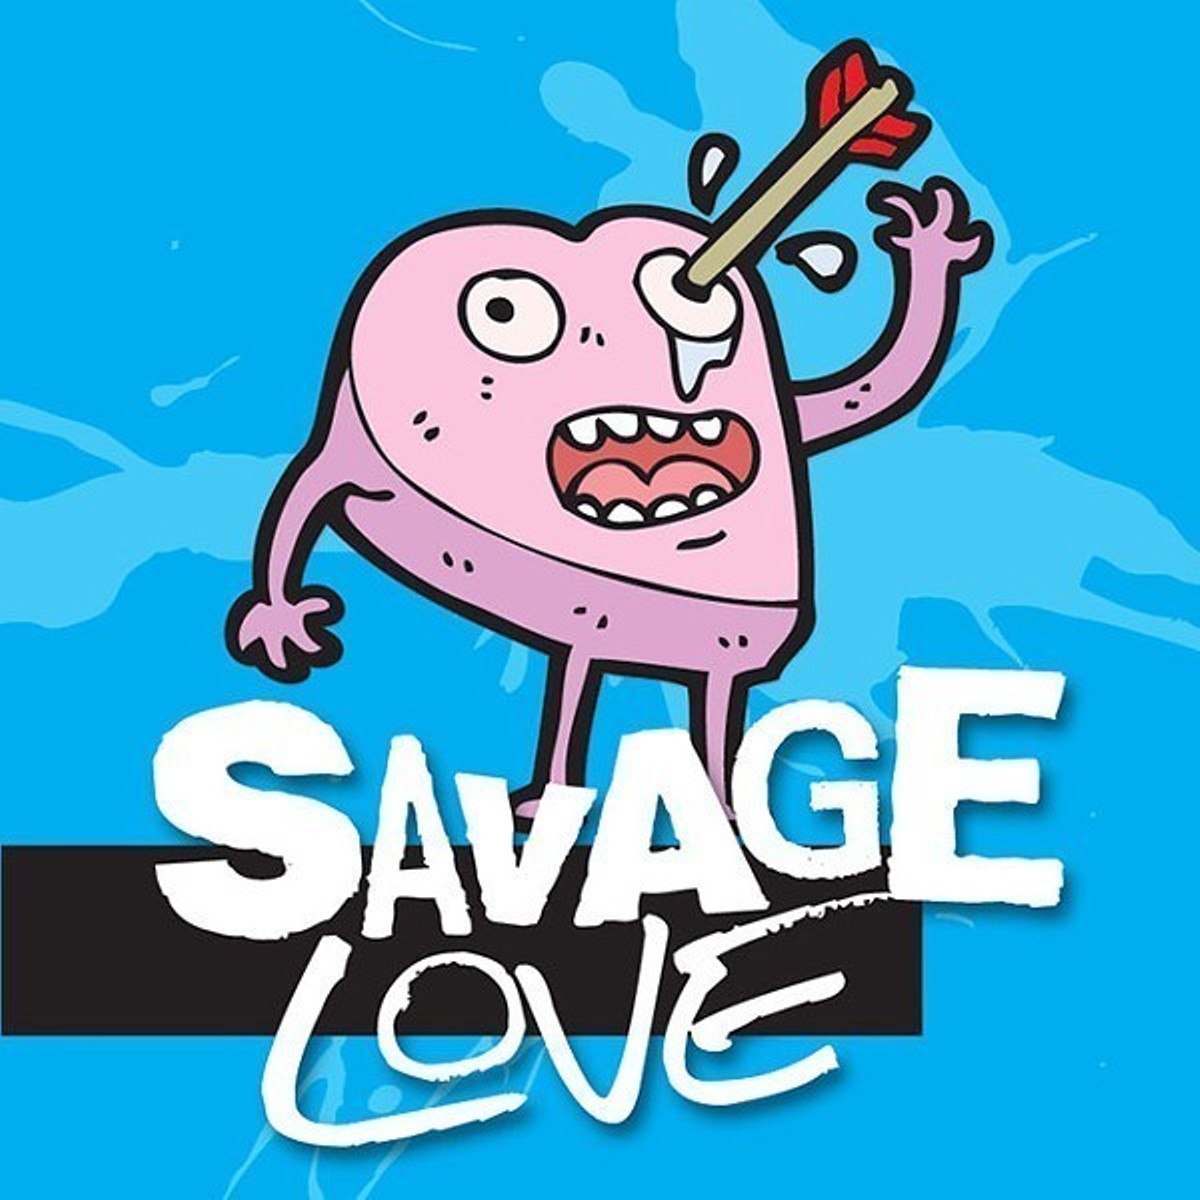 Savage Love: "Come Again"